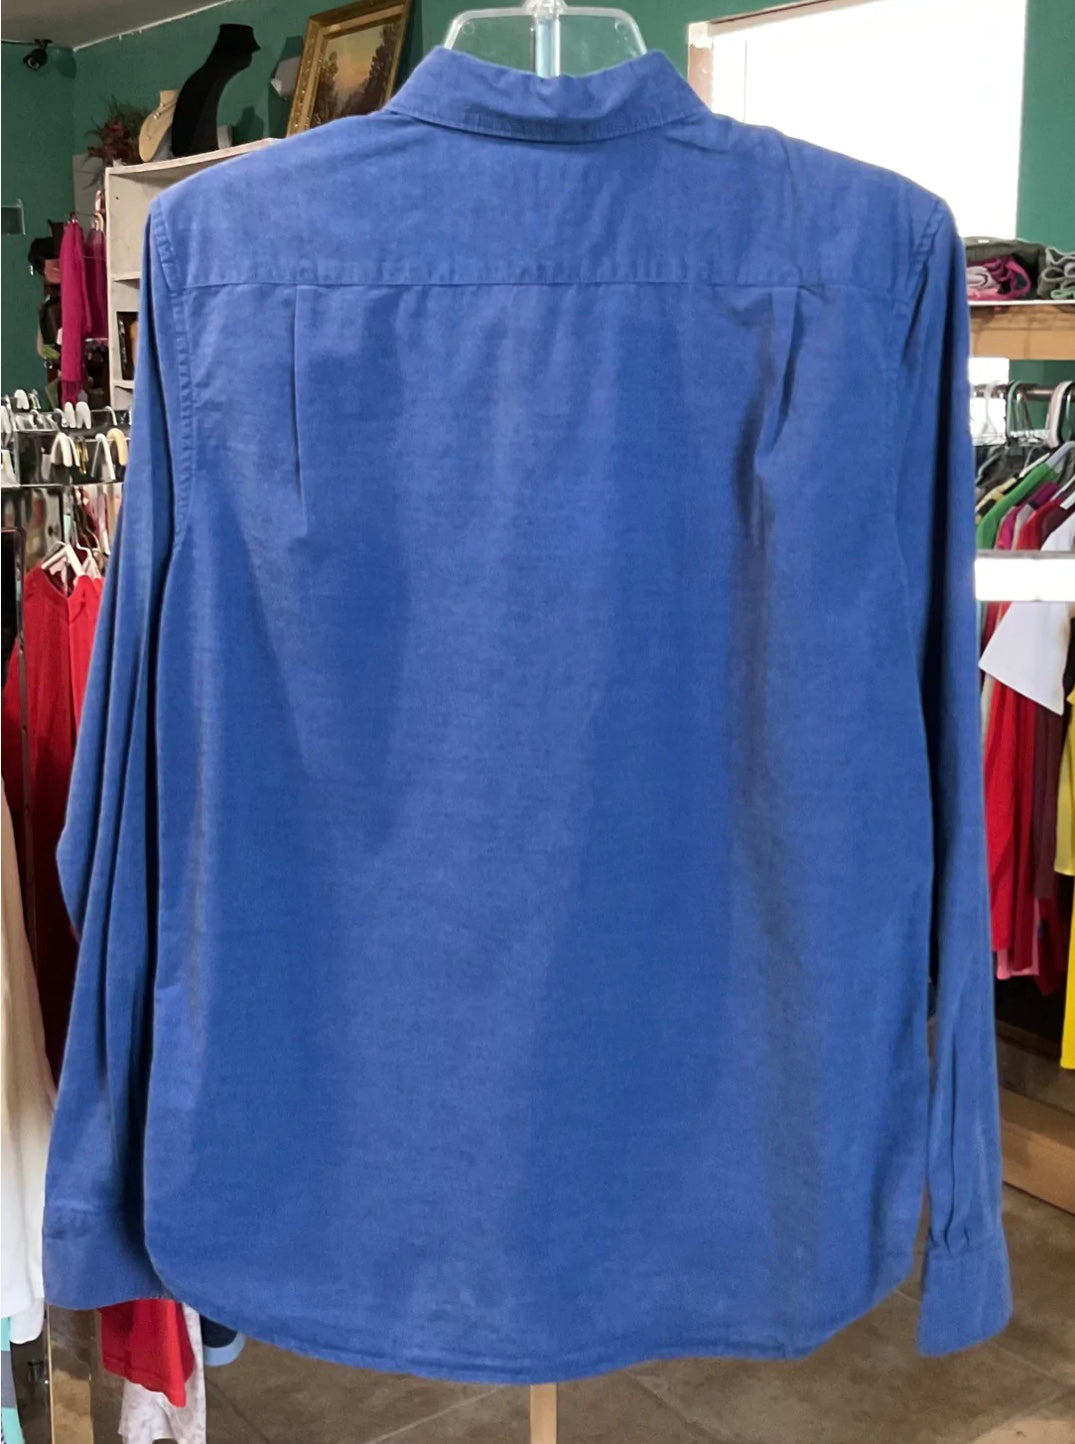 Denim & Flower Classic Blue Button Down Shirt Size S